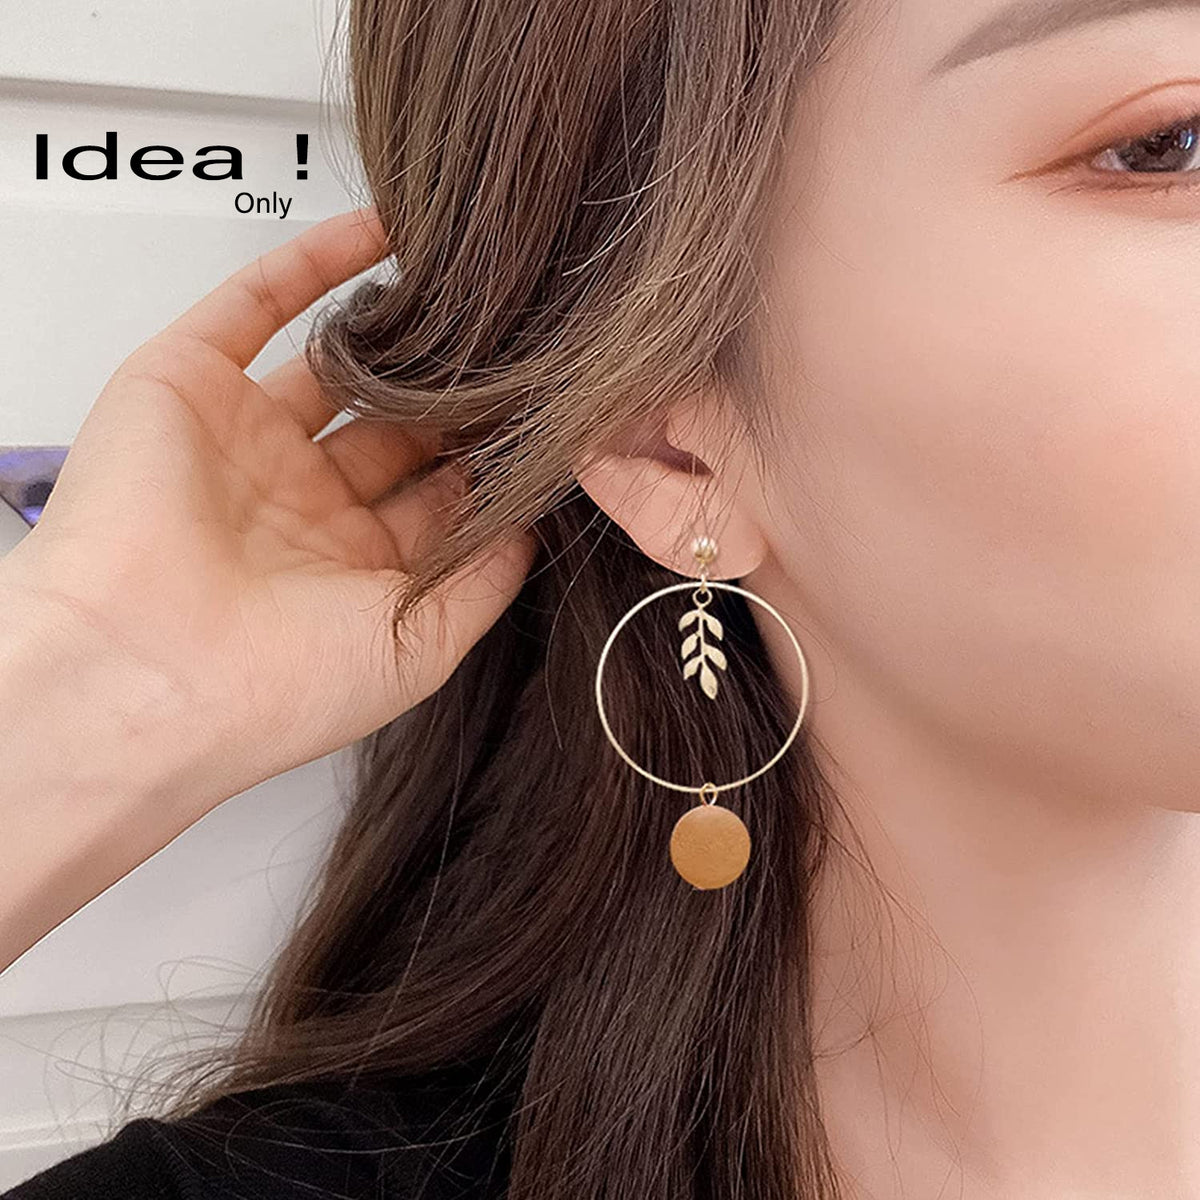 6 Bead Beaded Earrings 18mm Round Circle Stud Post & Backs W/connector Loop  Holes Dangle Style Earring Findings Jewelry Making 